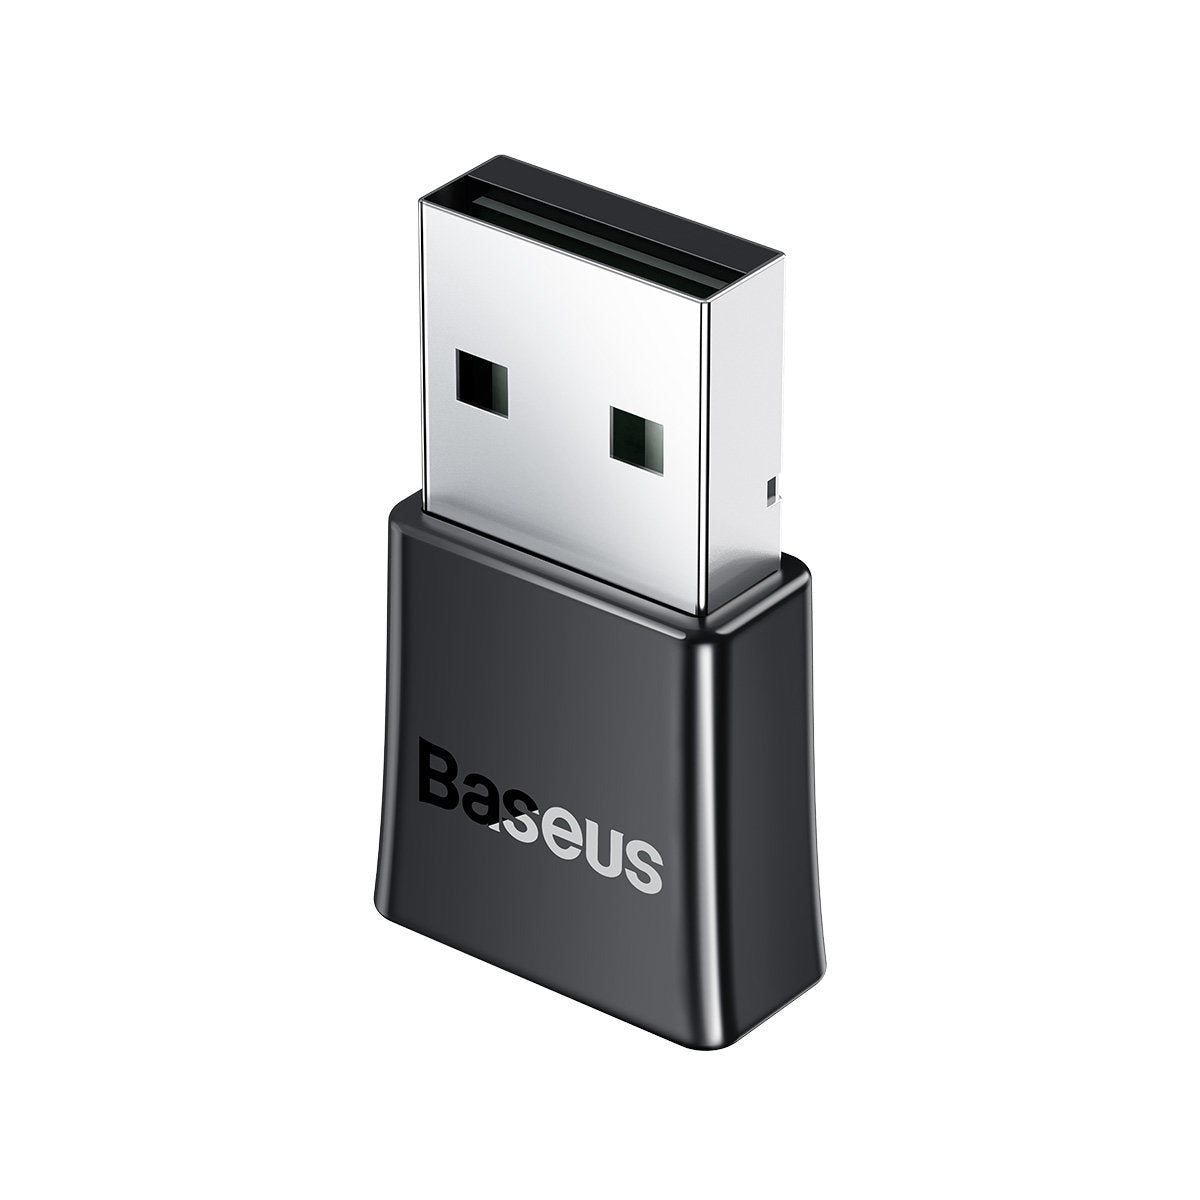 Baseus BA07 Wireless Adapter